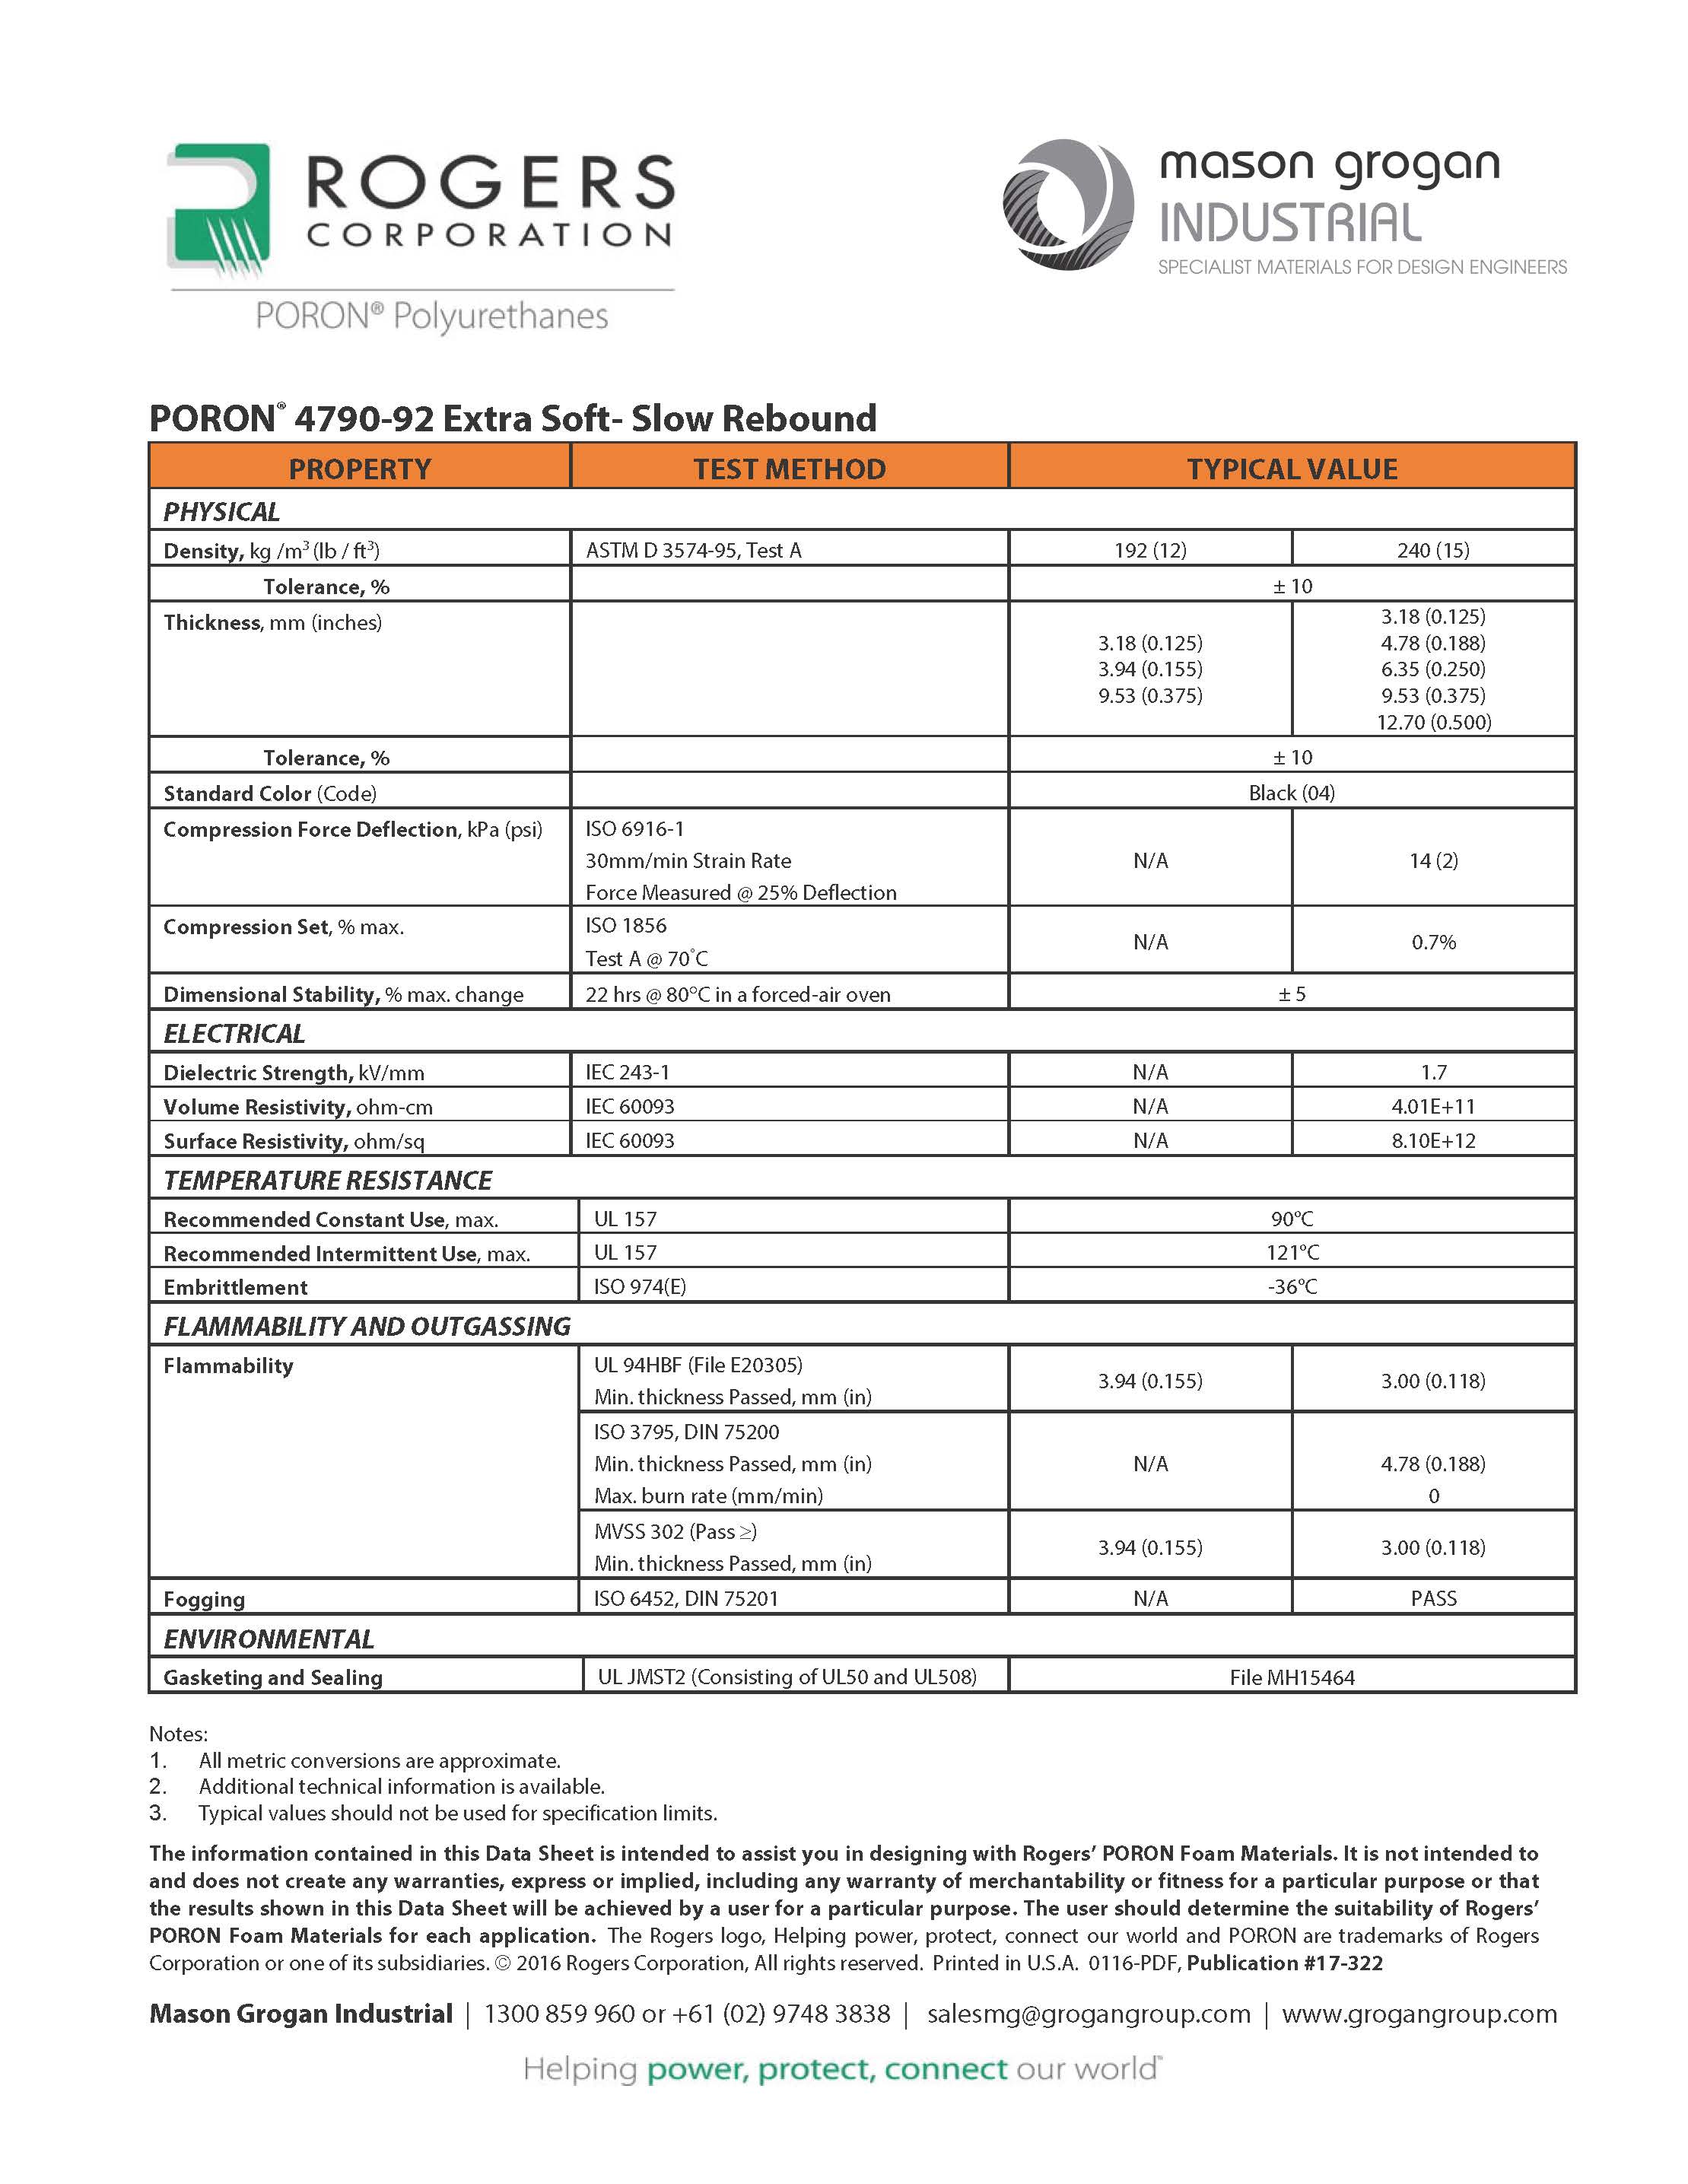 PORON® 4790-92 Extra-Soft Slow-Rebound Global Standards Data Sheet